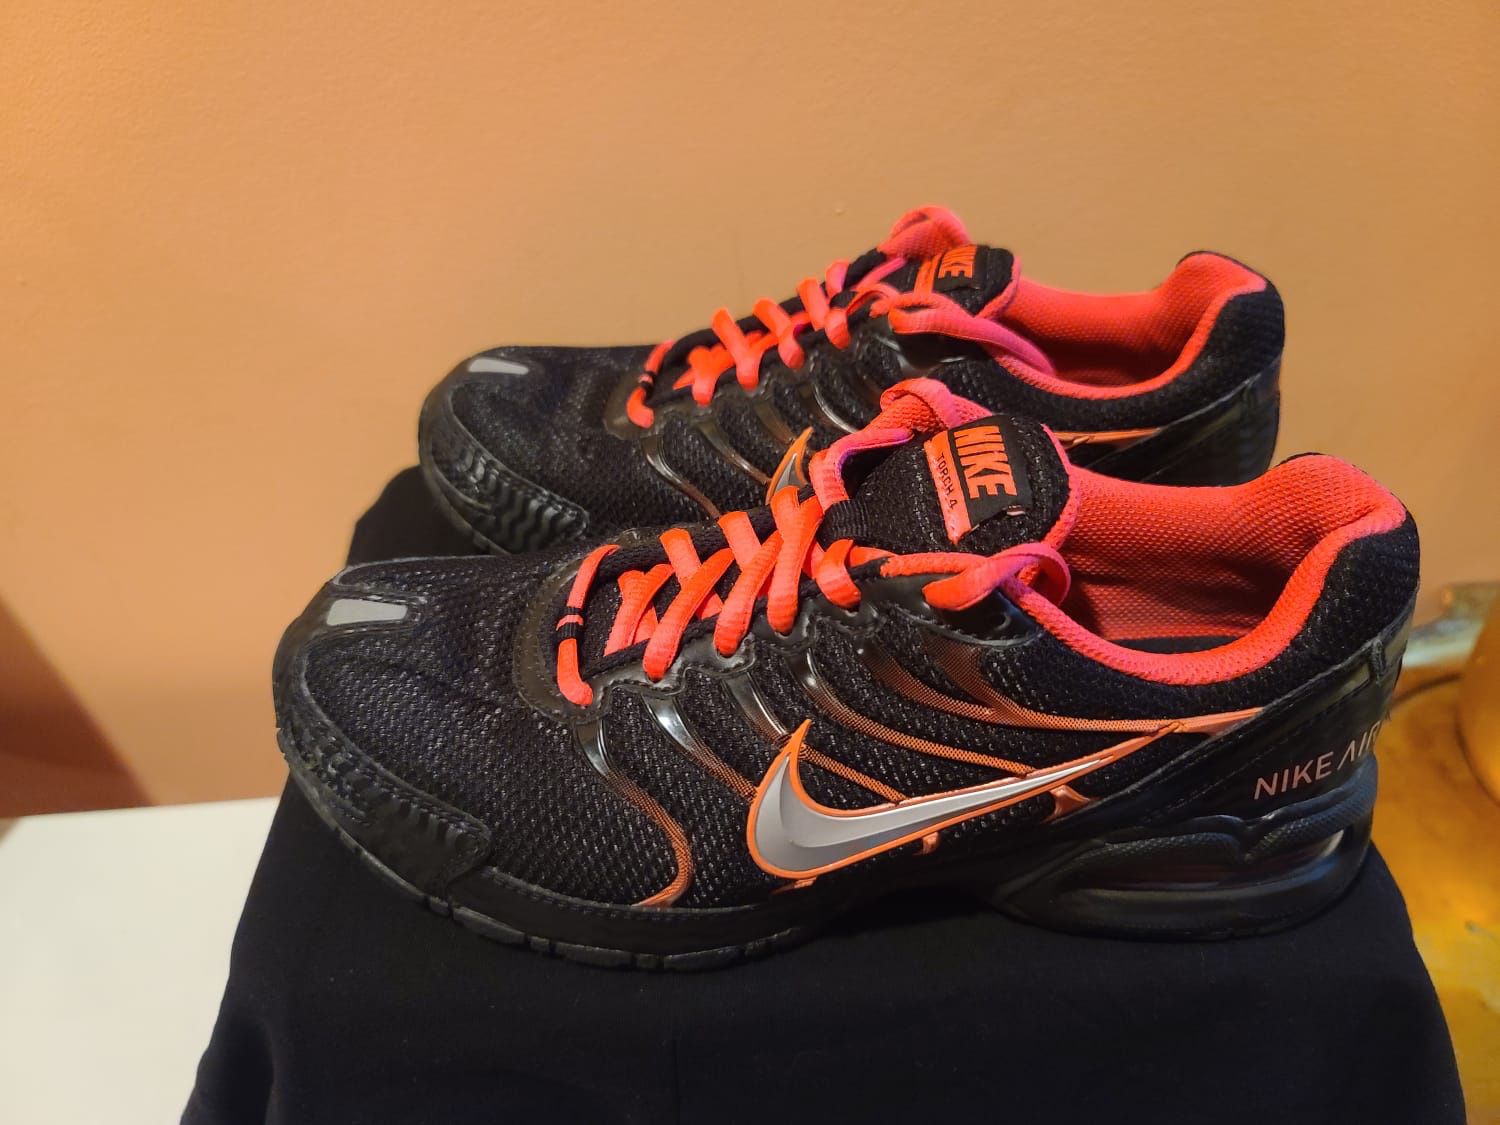 Nike Air Max Torch 4 IV WOMEN'S Shoes Sneakers Running Cross Training Gym NIB size 7.5